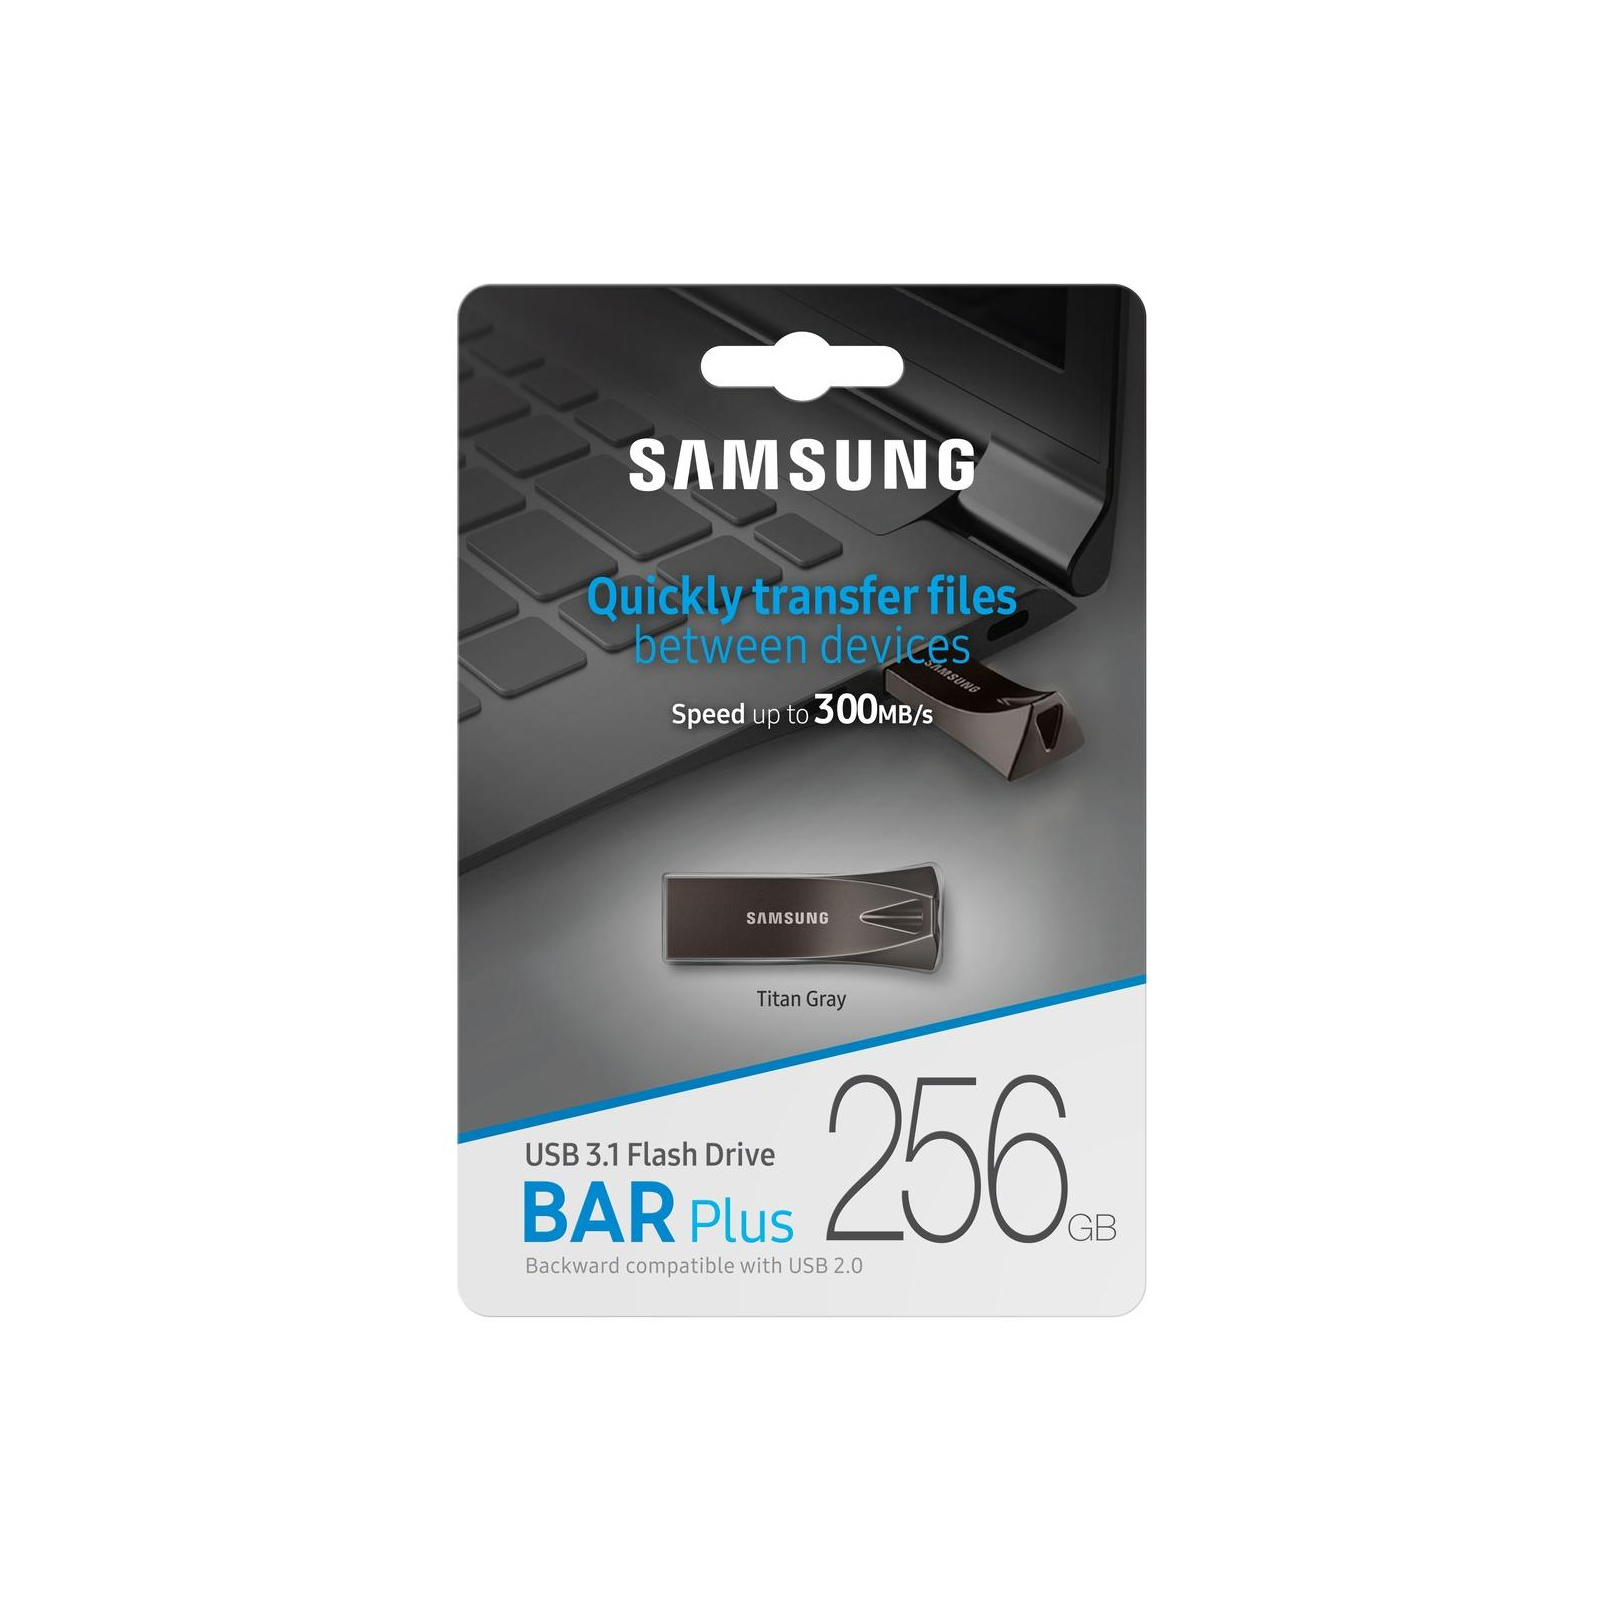 USB флеш накопитель Samsung 64GB Bar Plus Black USB 3.1 (MUF-64BE4/APC) изображение 7